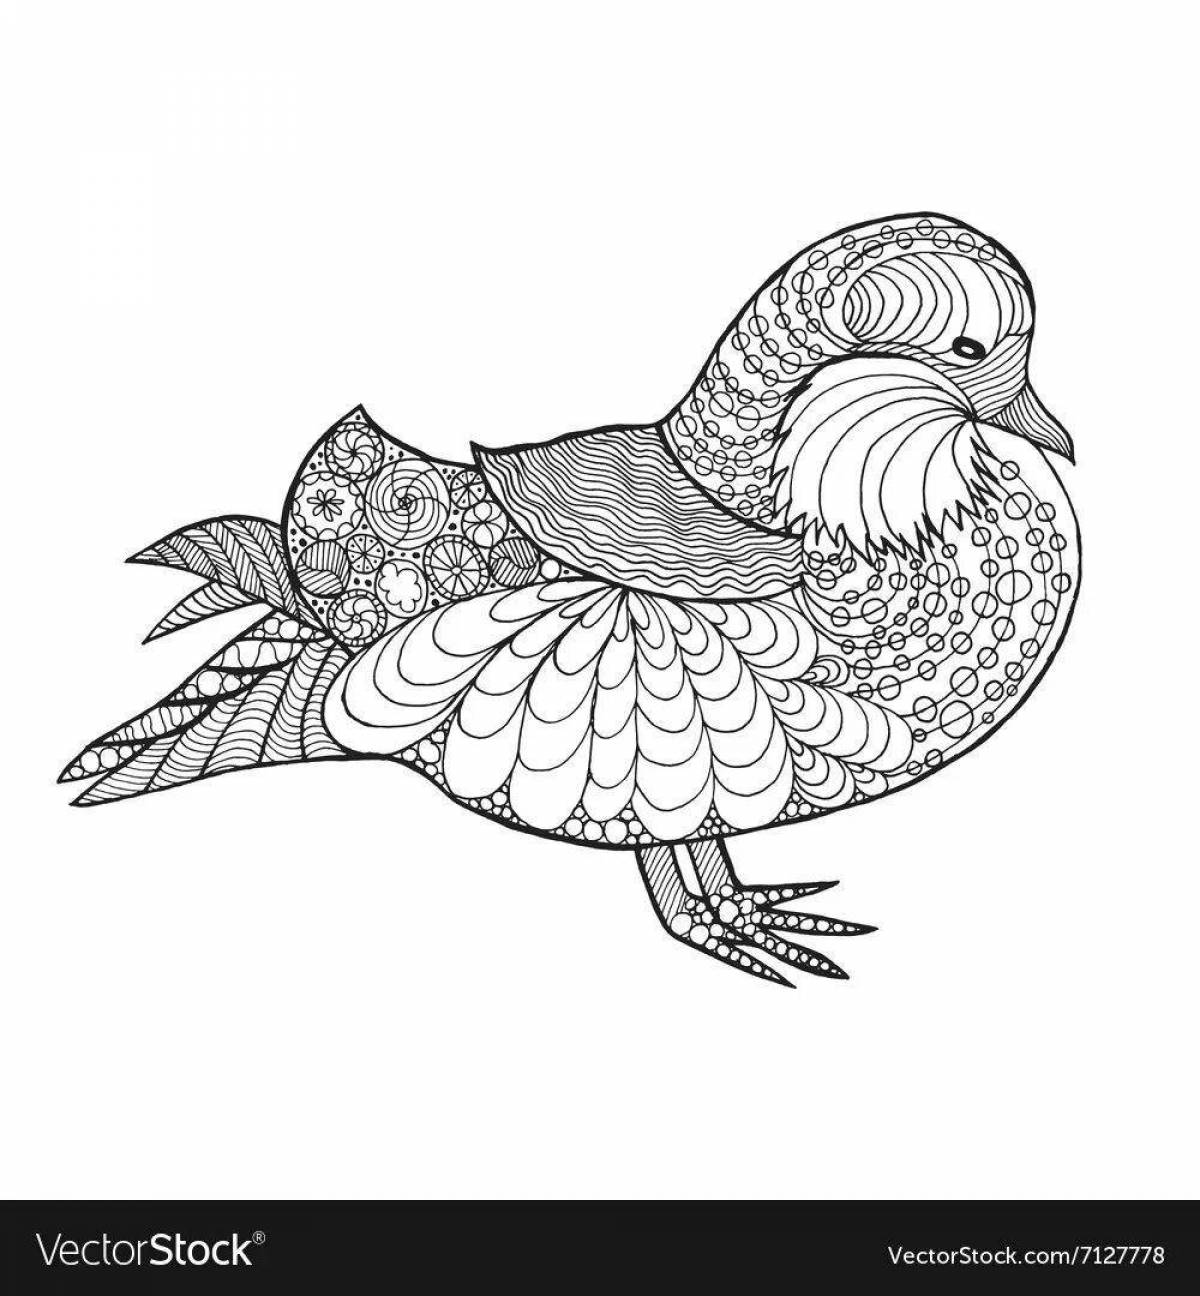 Awesome mandarin bird coloring page